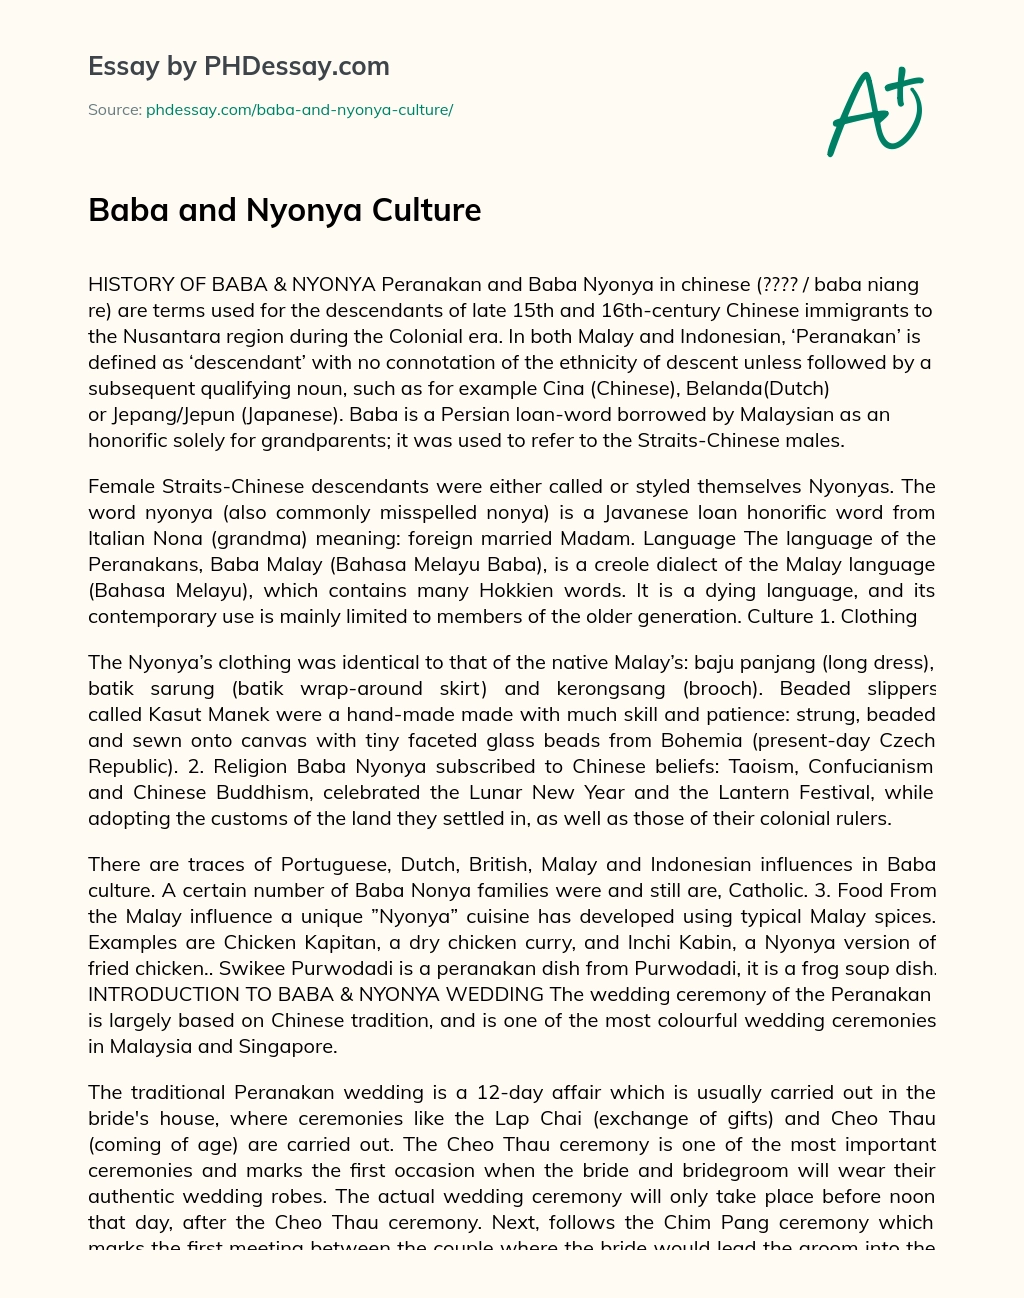 Baba and Nyonya Culture essay